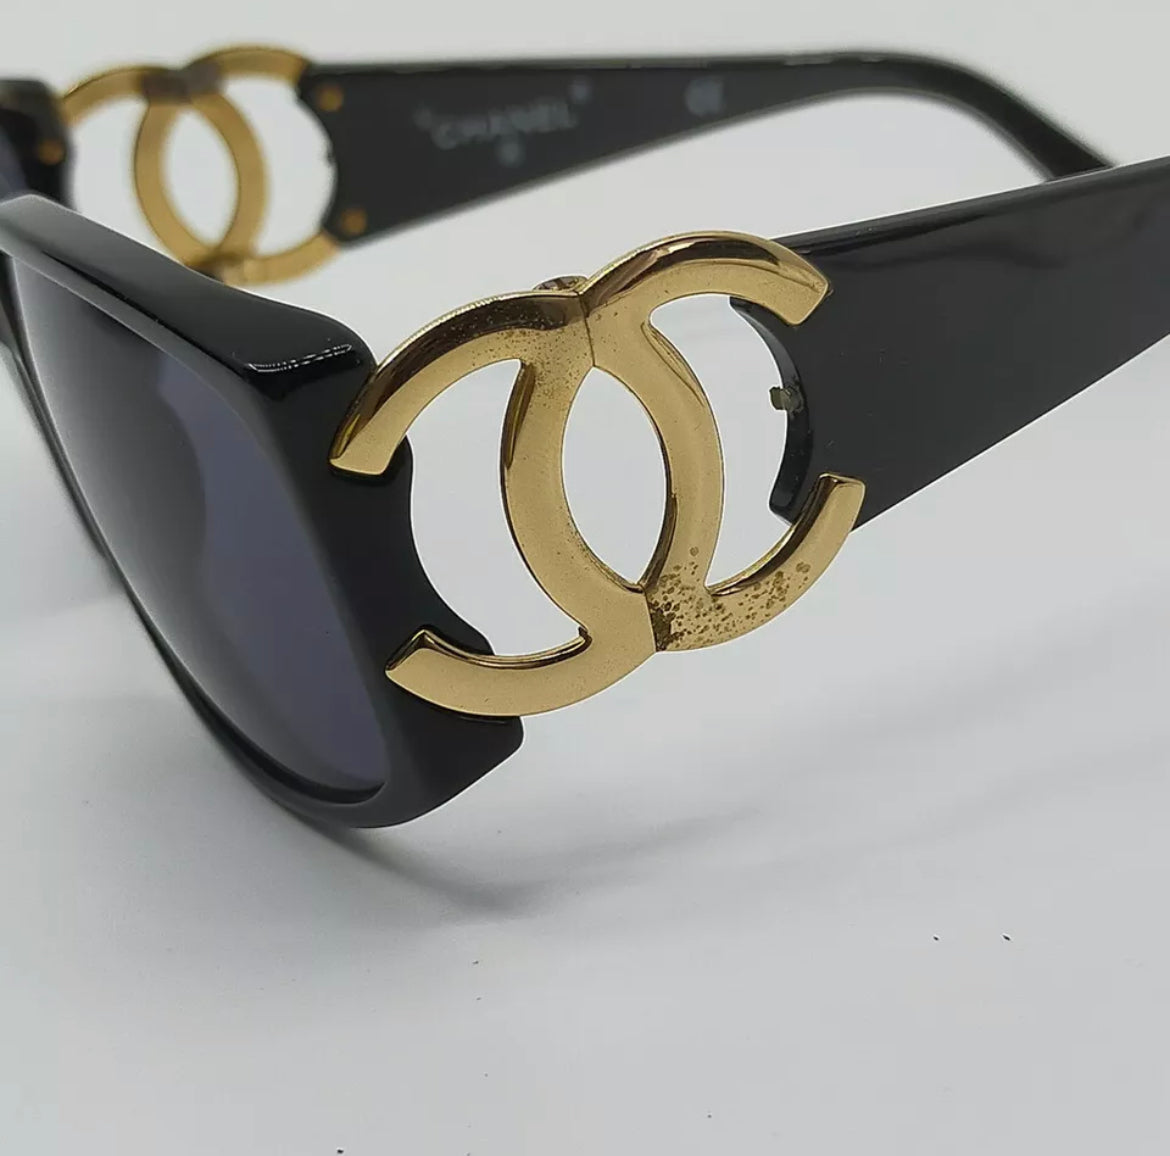 90s sunglasses Chanel - Gem